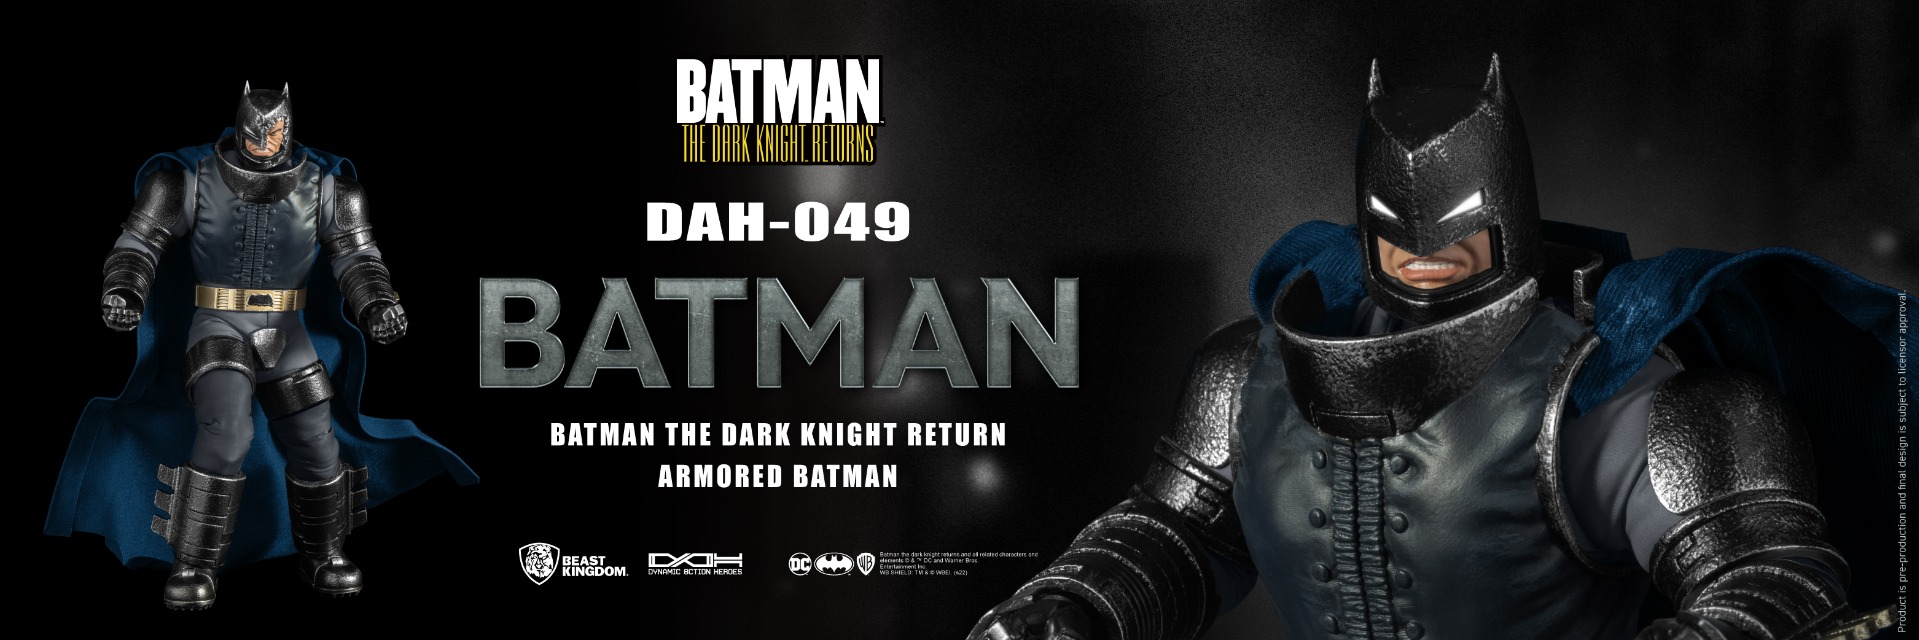 DAH-049 BATMAN: The dark knight returns  Armored Batman